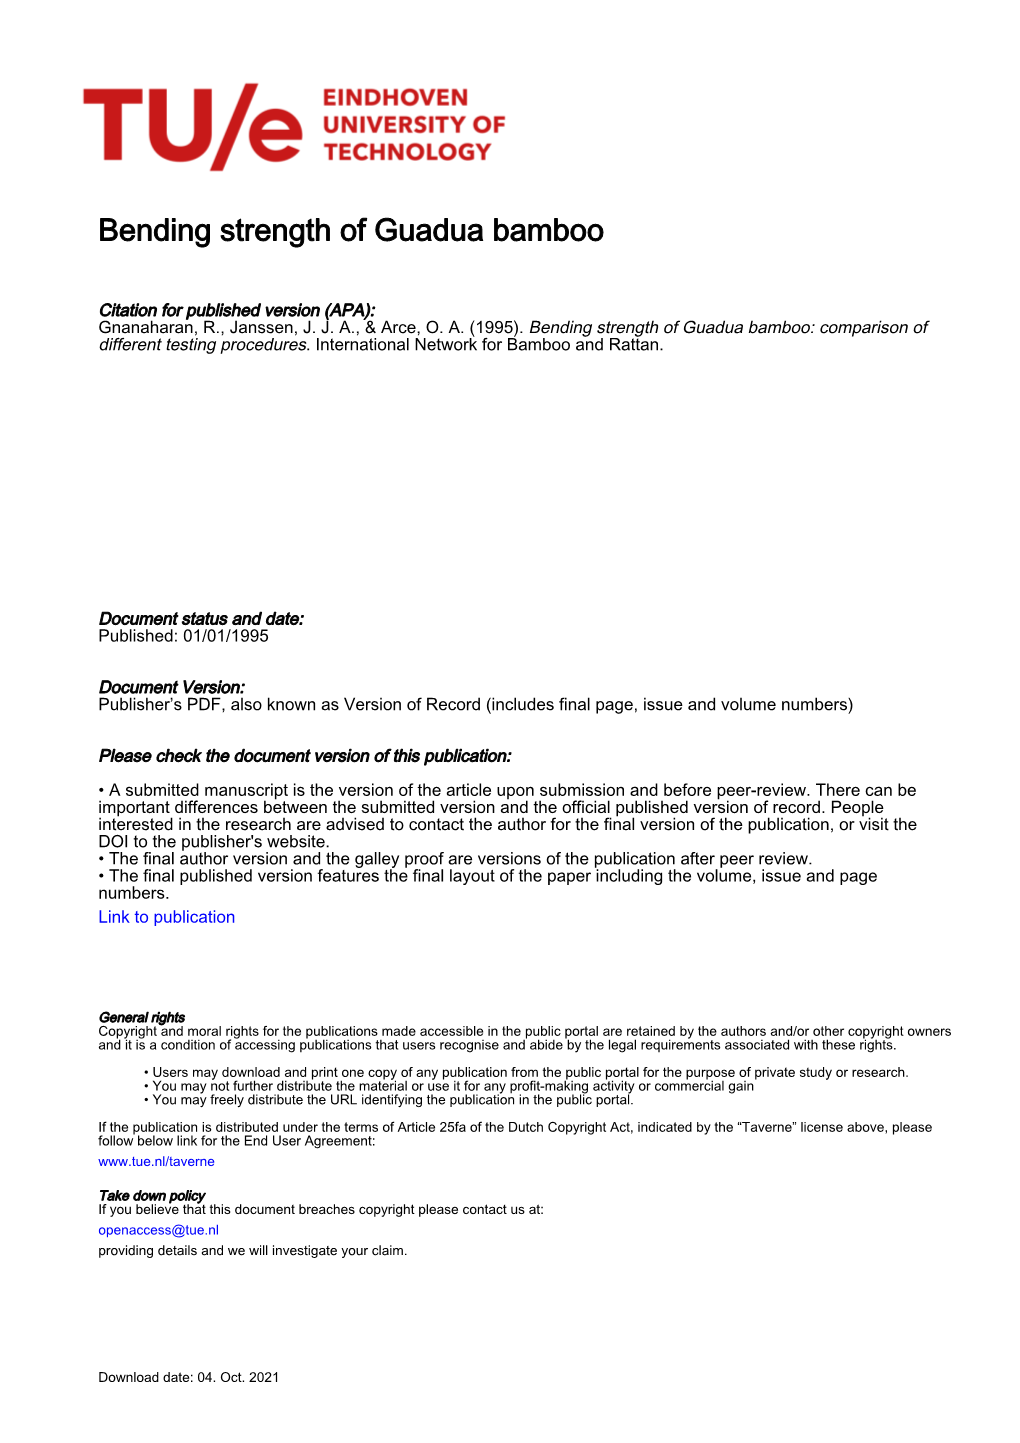 Bending Strength of Guadua Bamboo